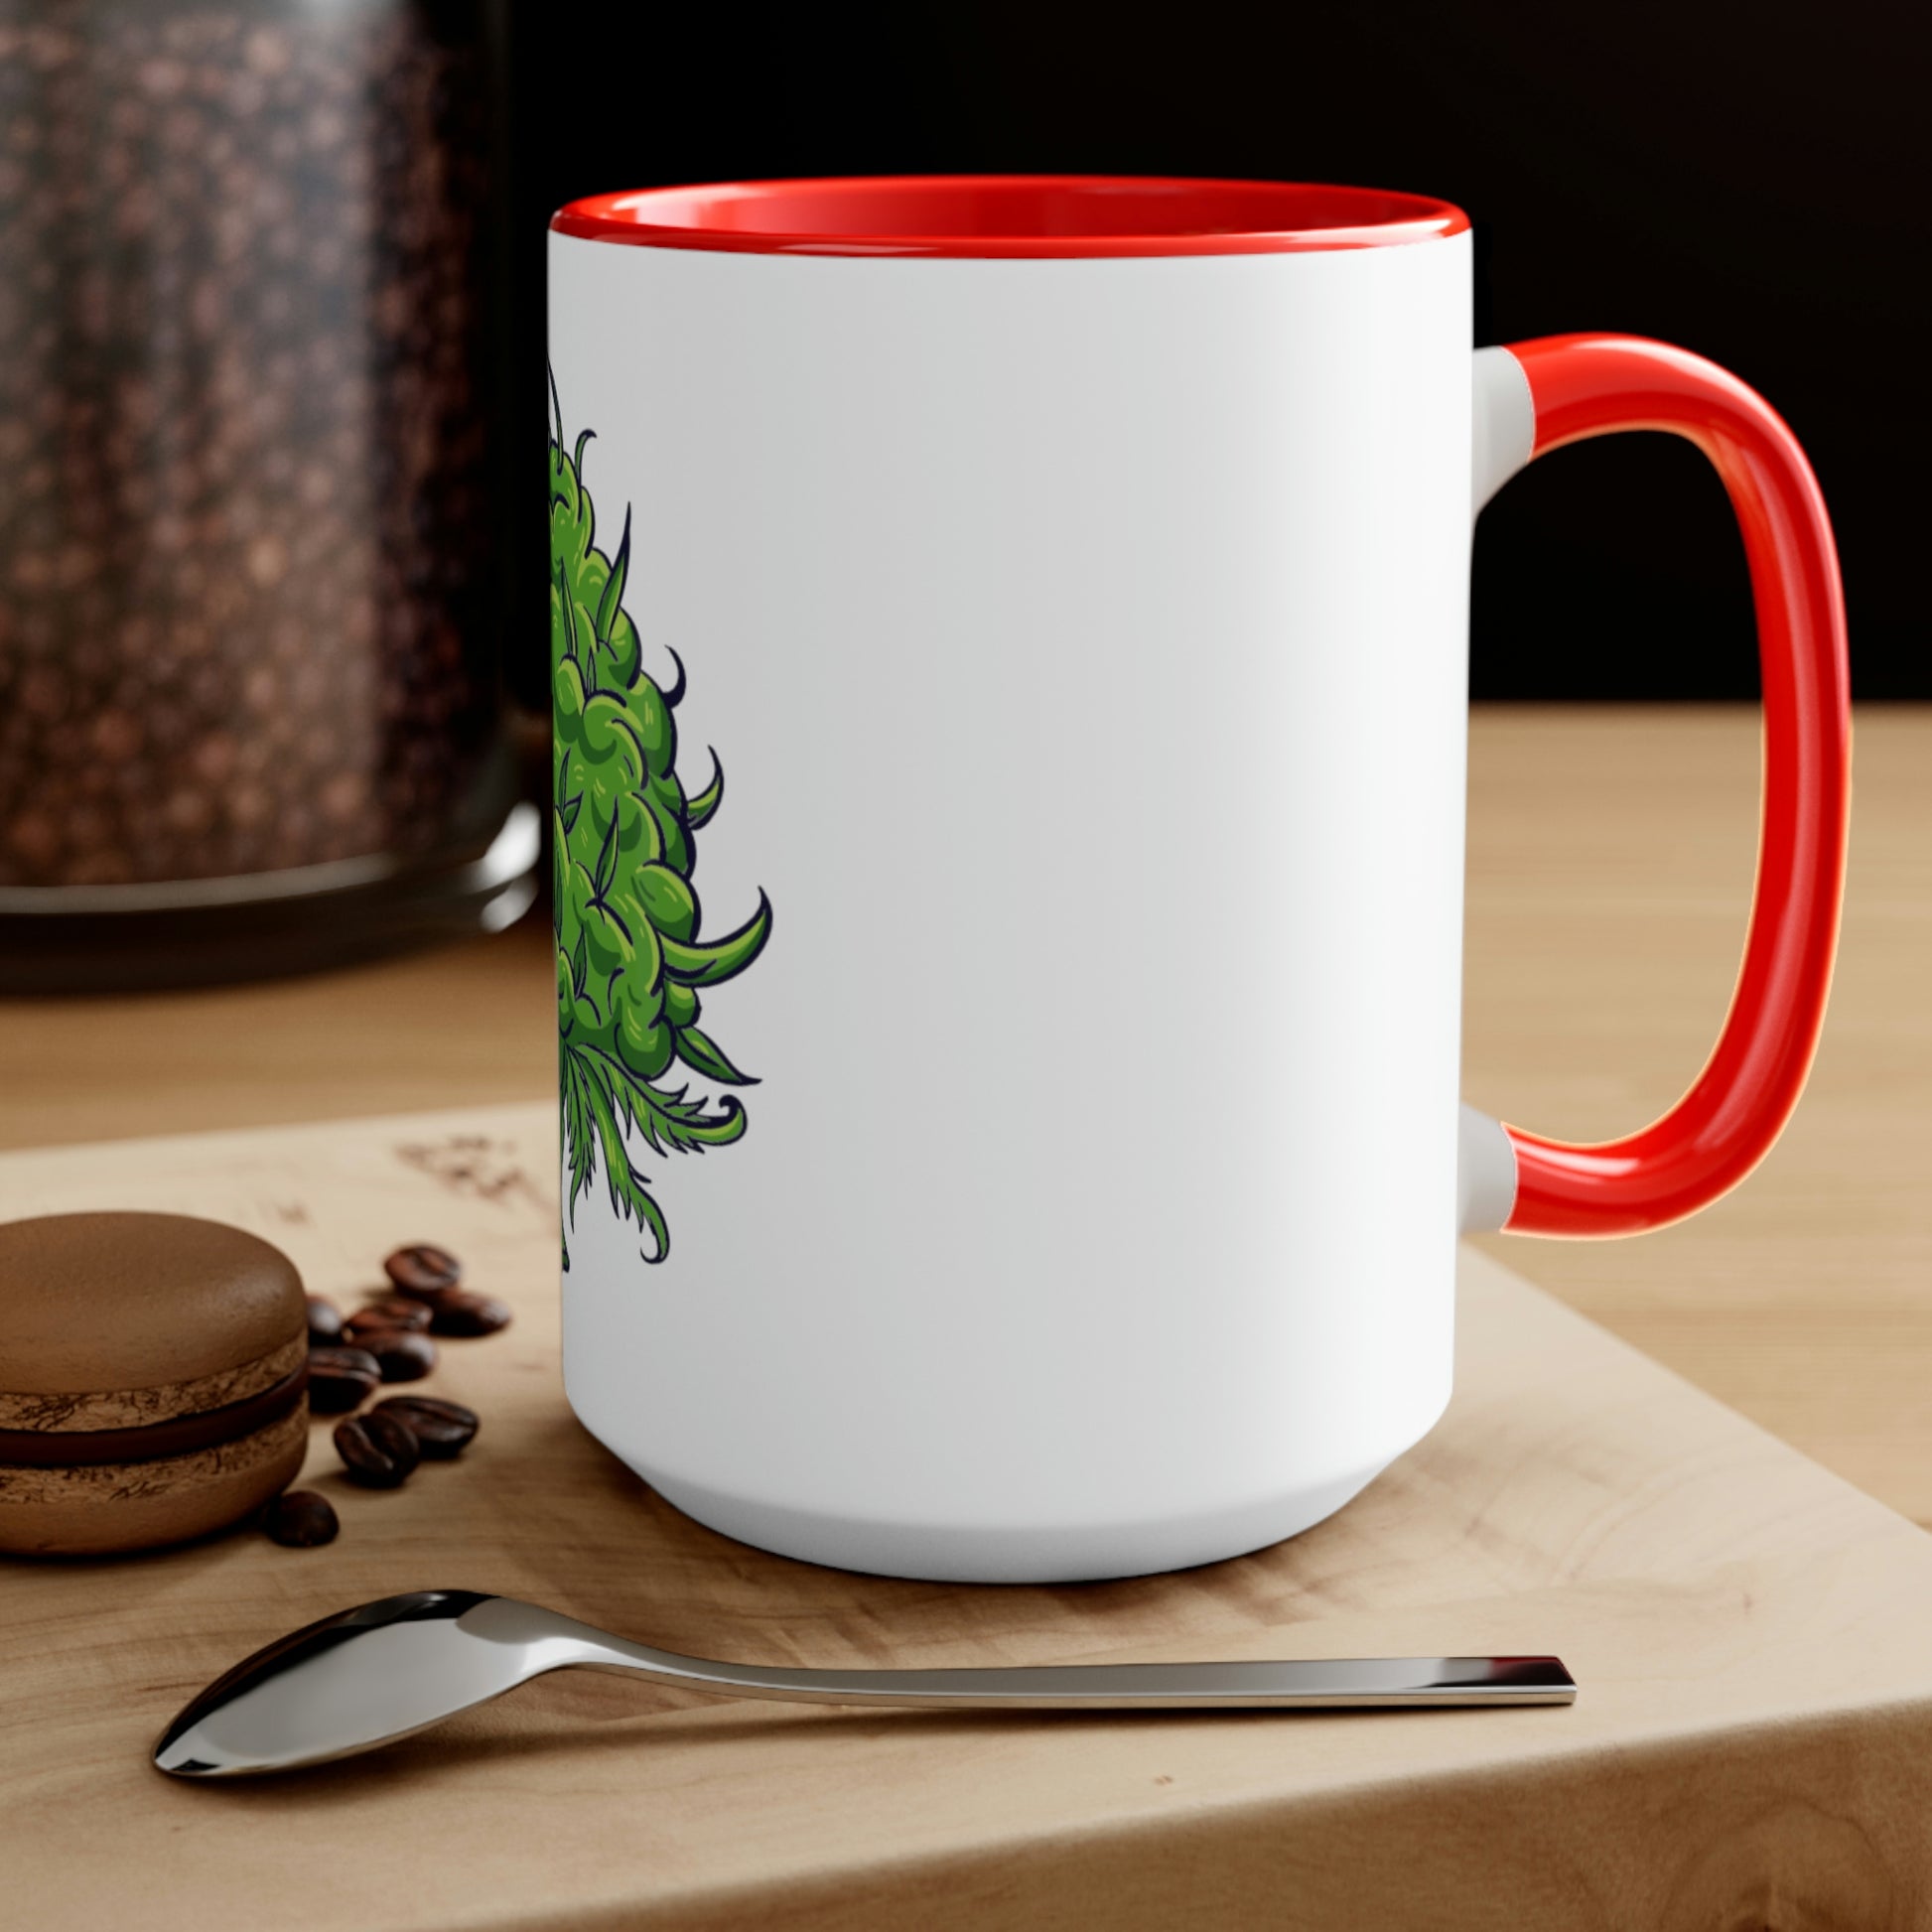 a Big Cannabis Nug Coffee Mug with a green monster on it.